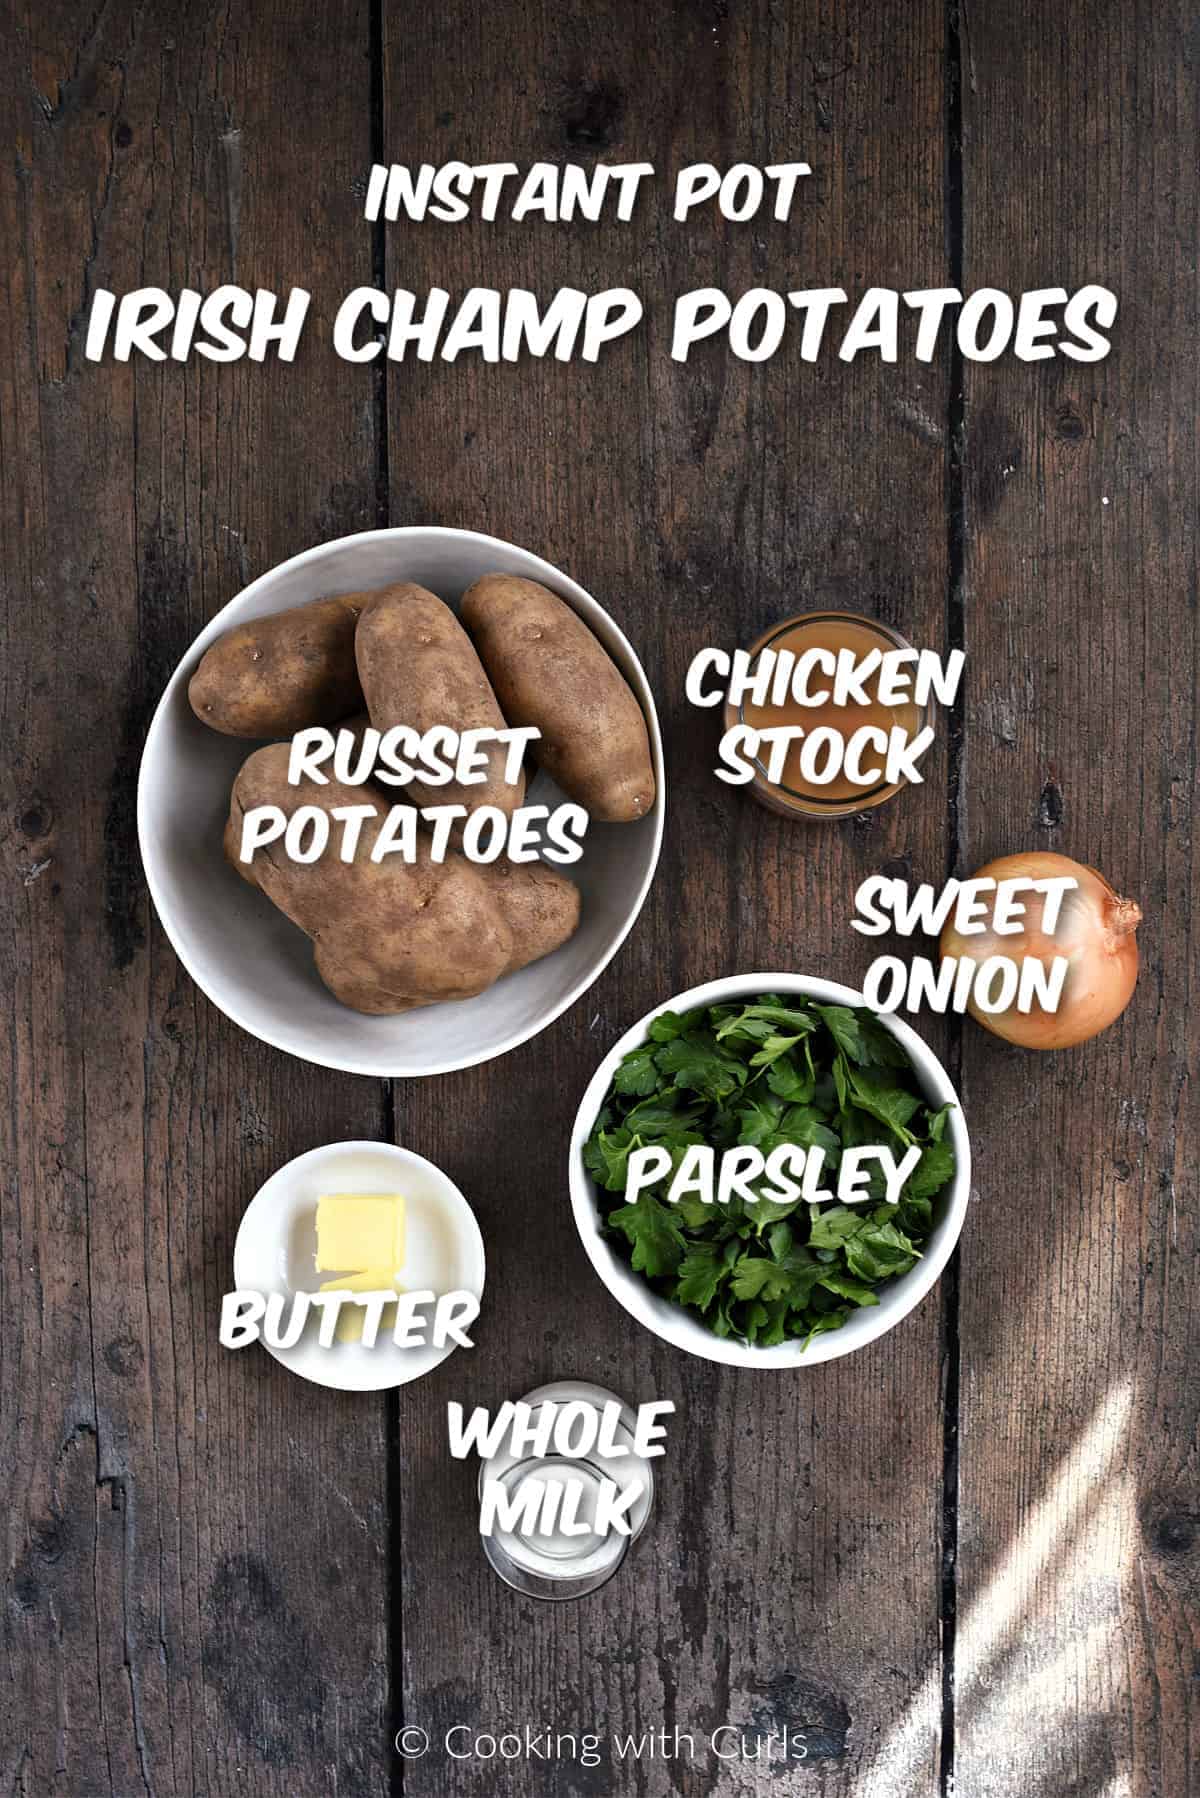 Instant Pot Irish Champ Potatoes ingredients. 